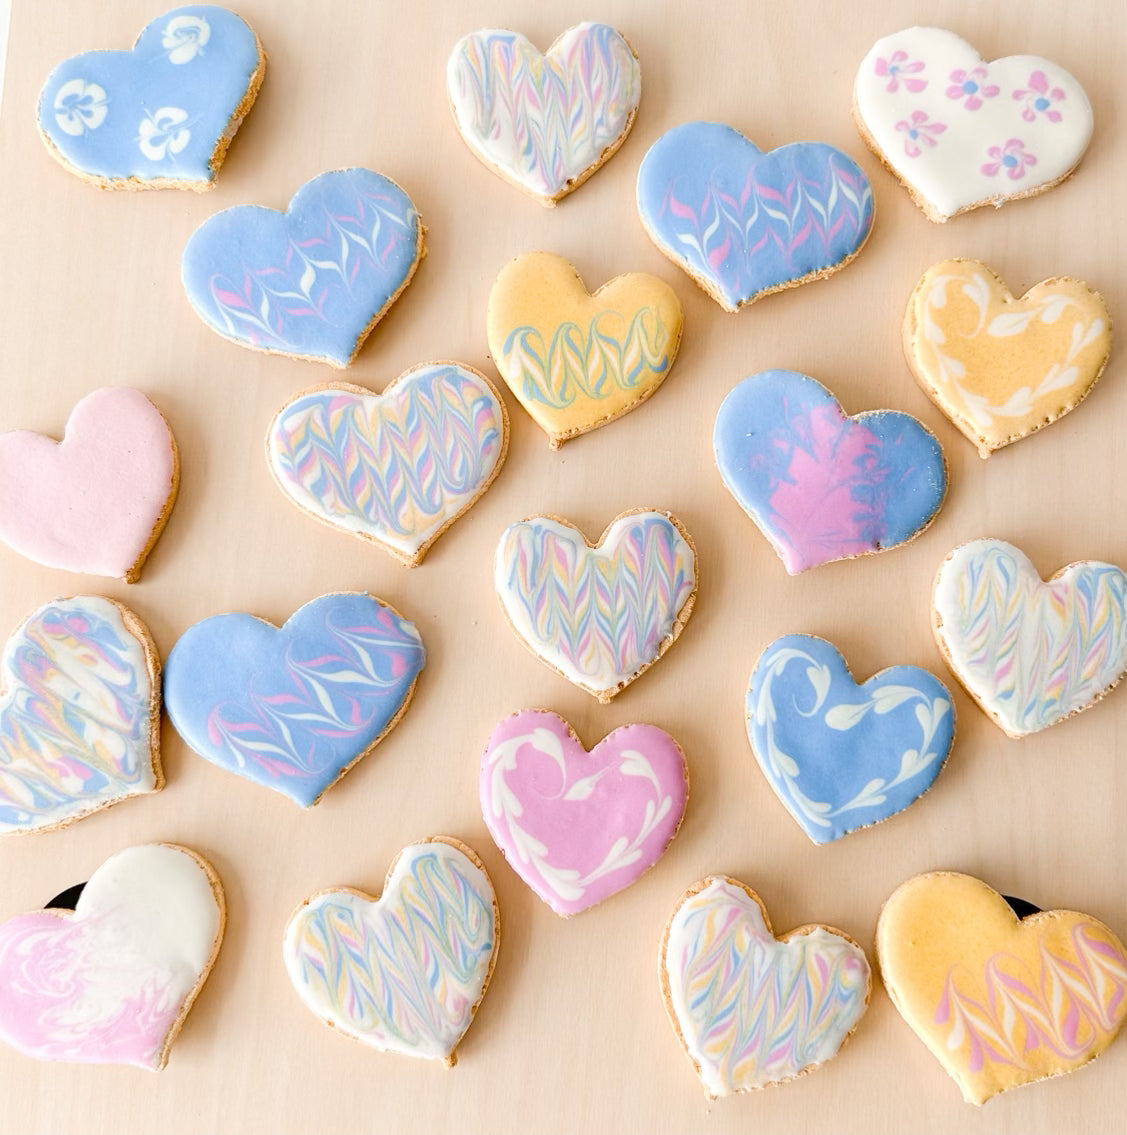 Iced Loveyloos Cookies